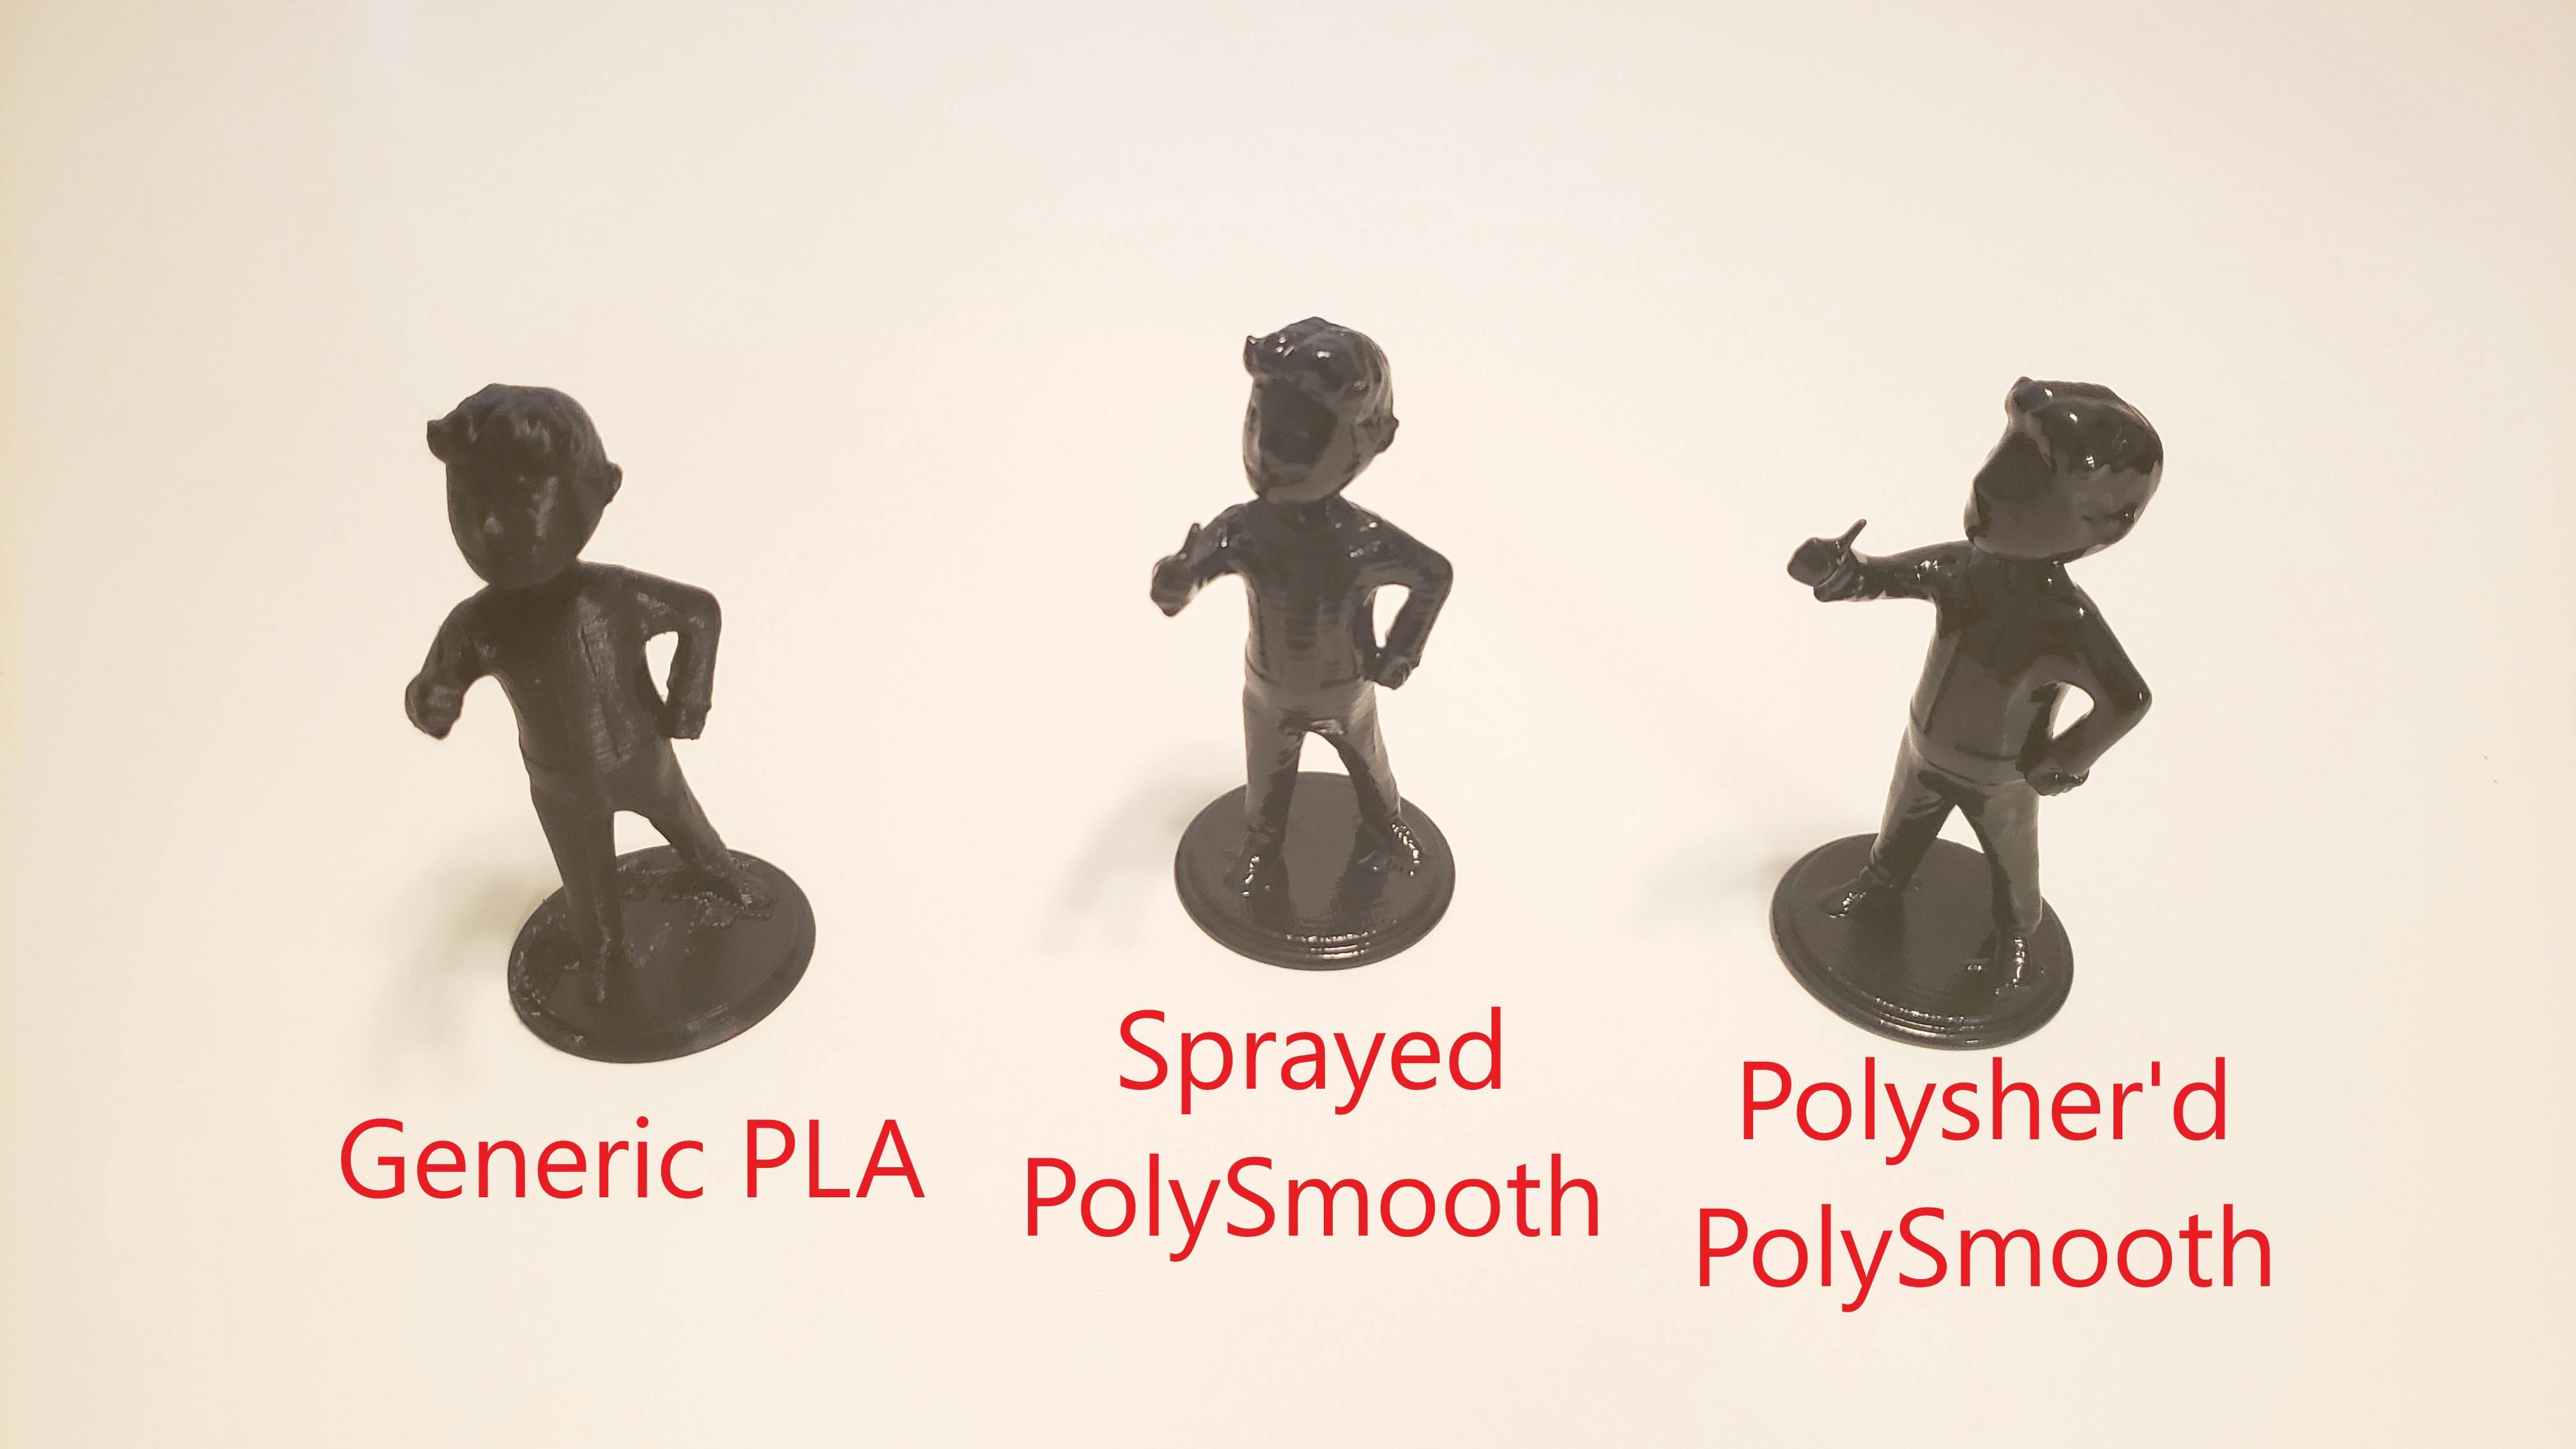 The Polysher Polymaker - 3D FilaPrint